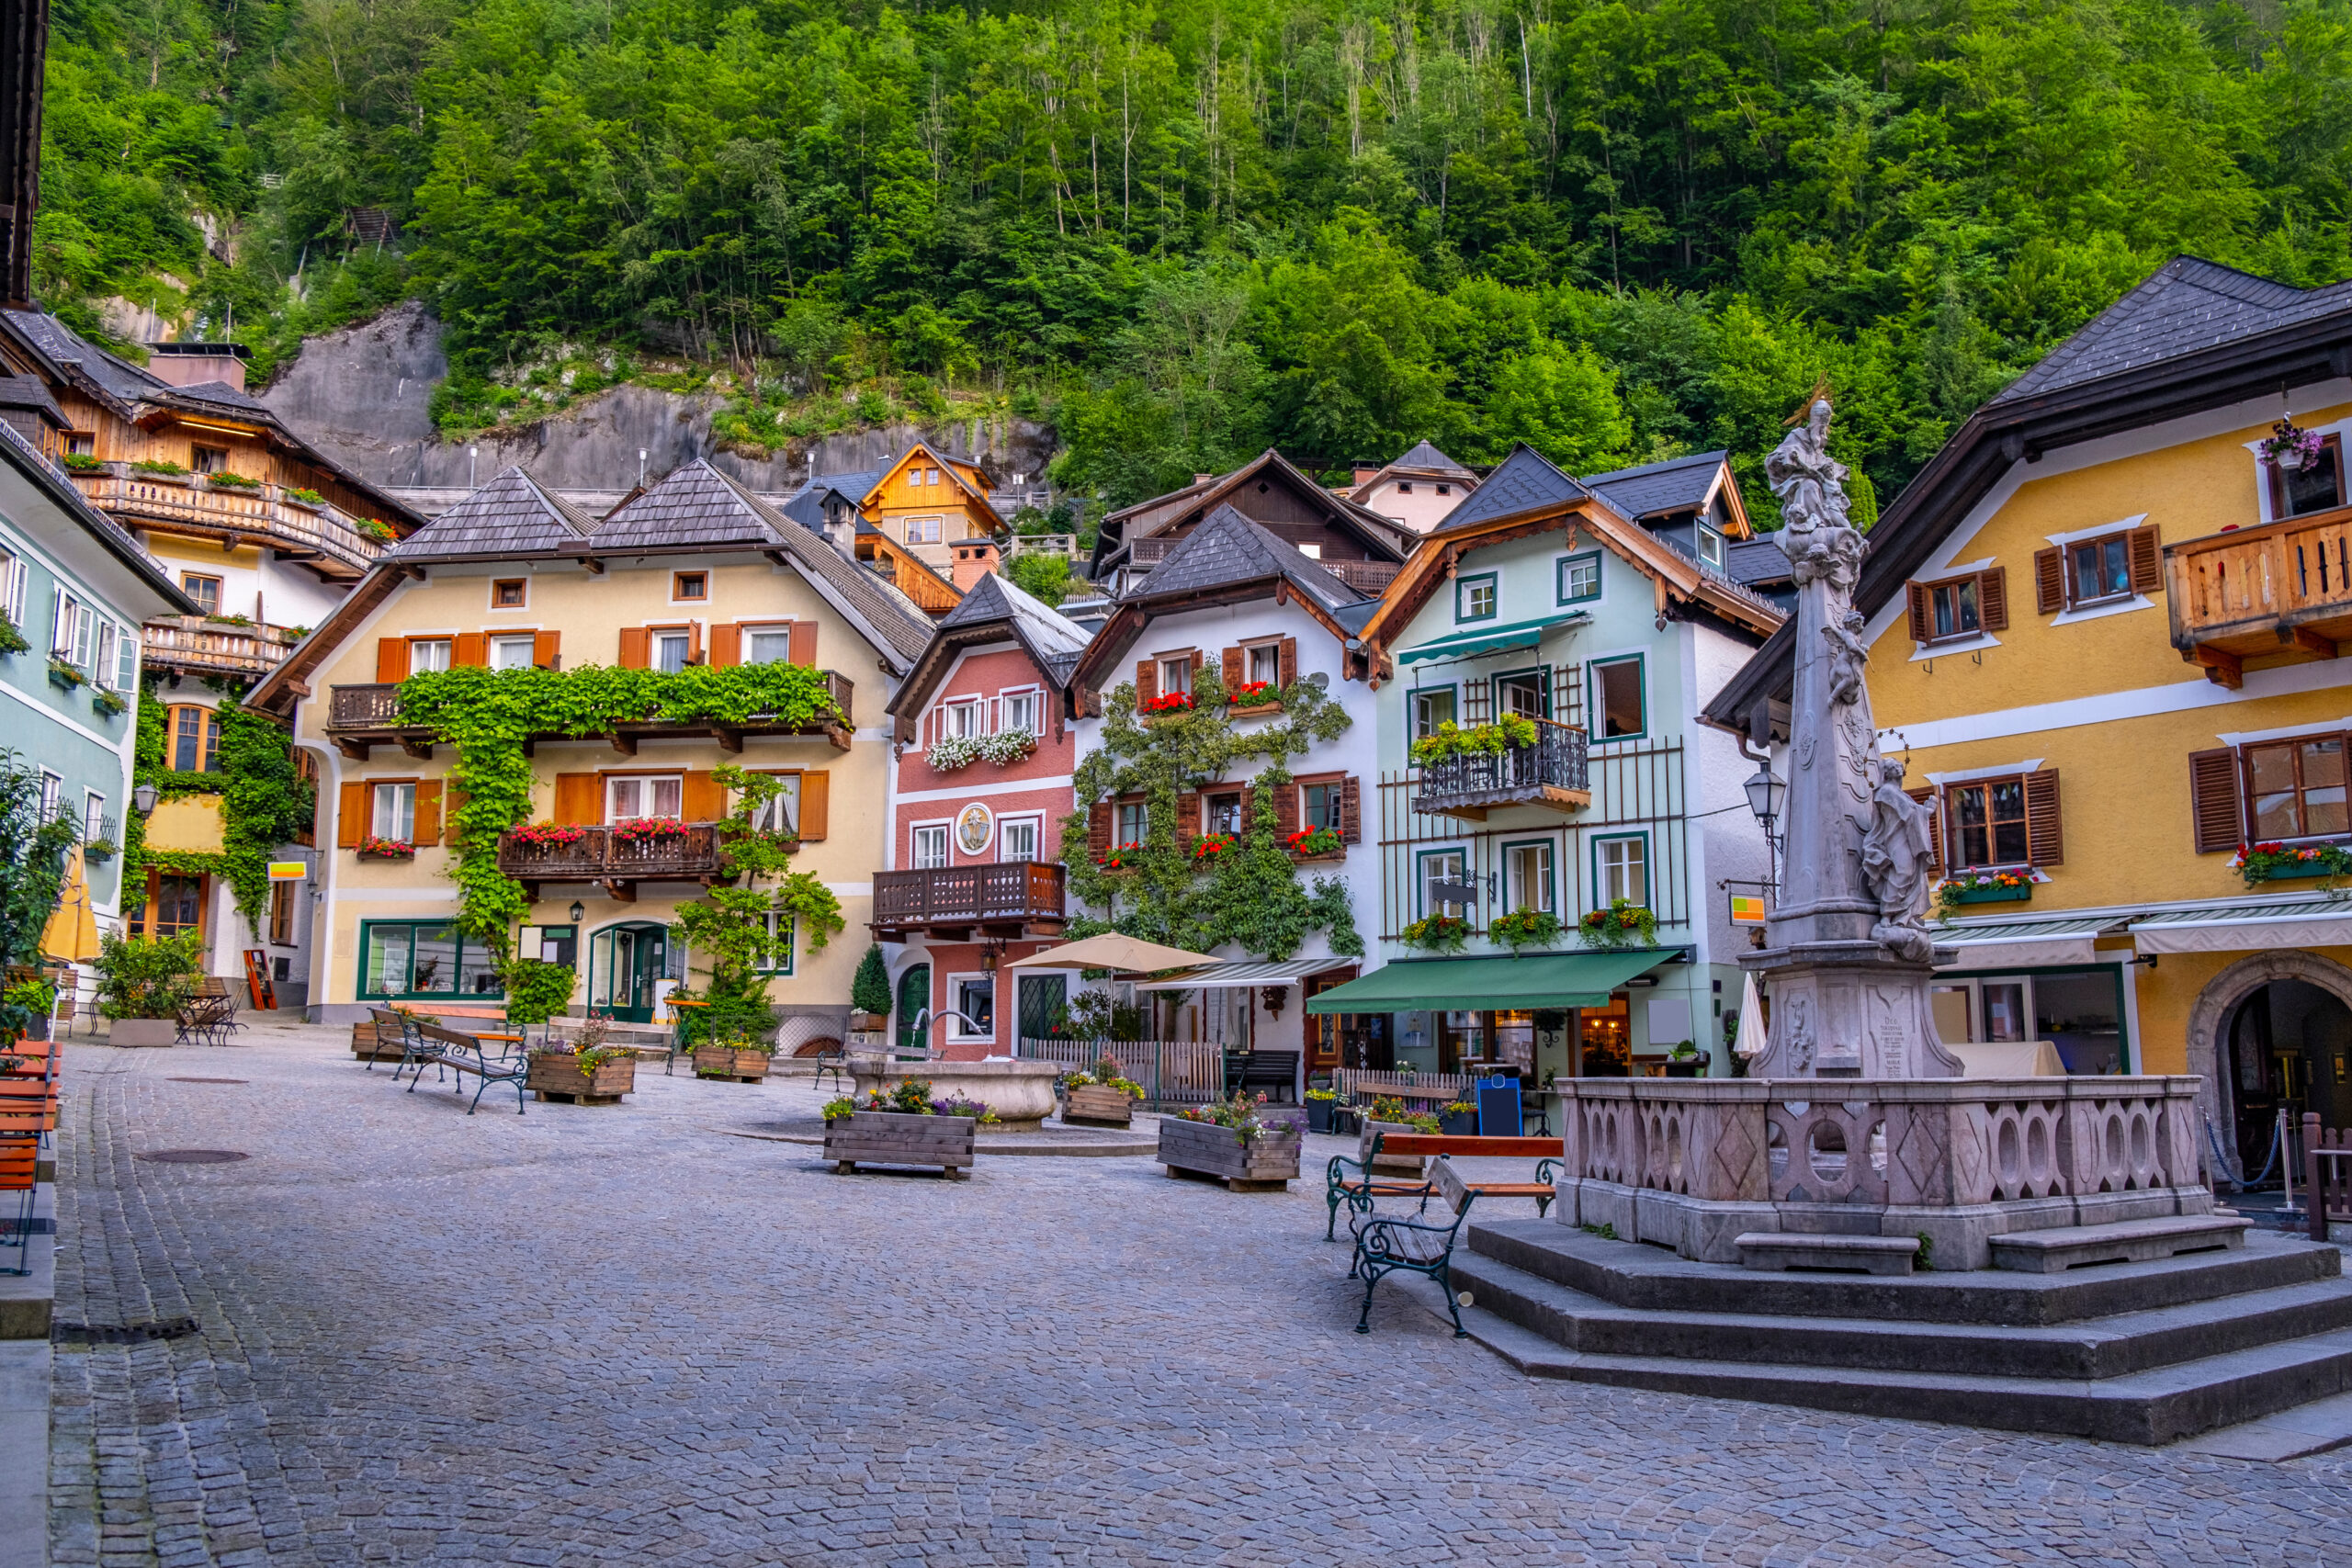 Colourful historical village square.